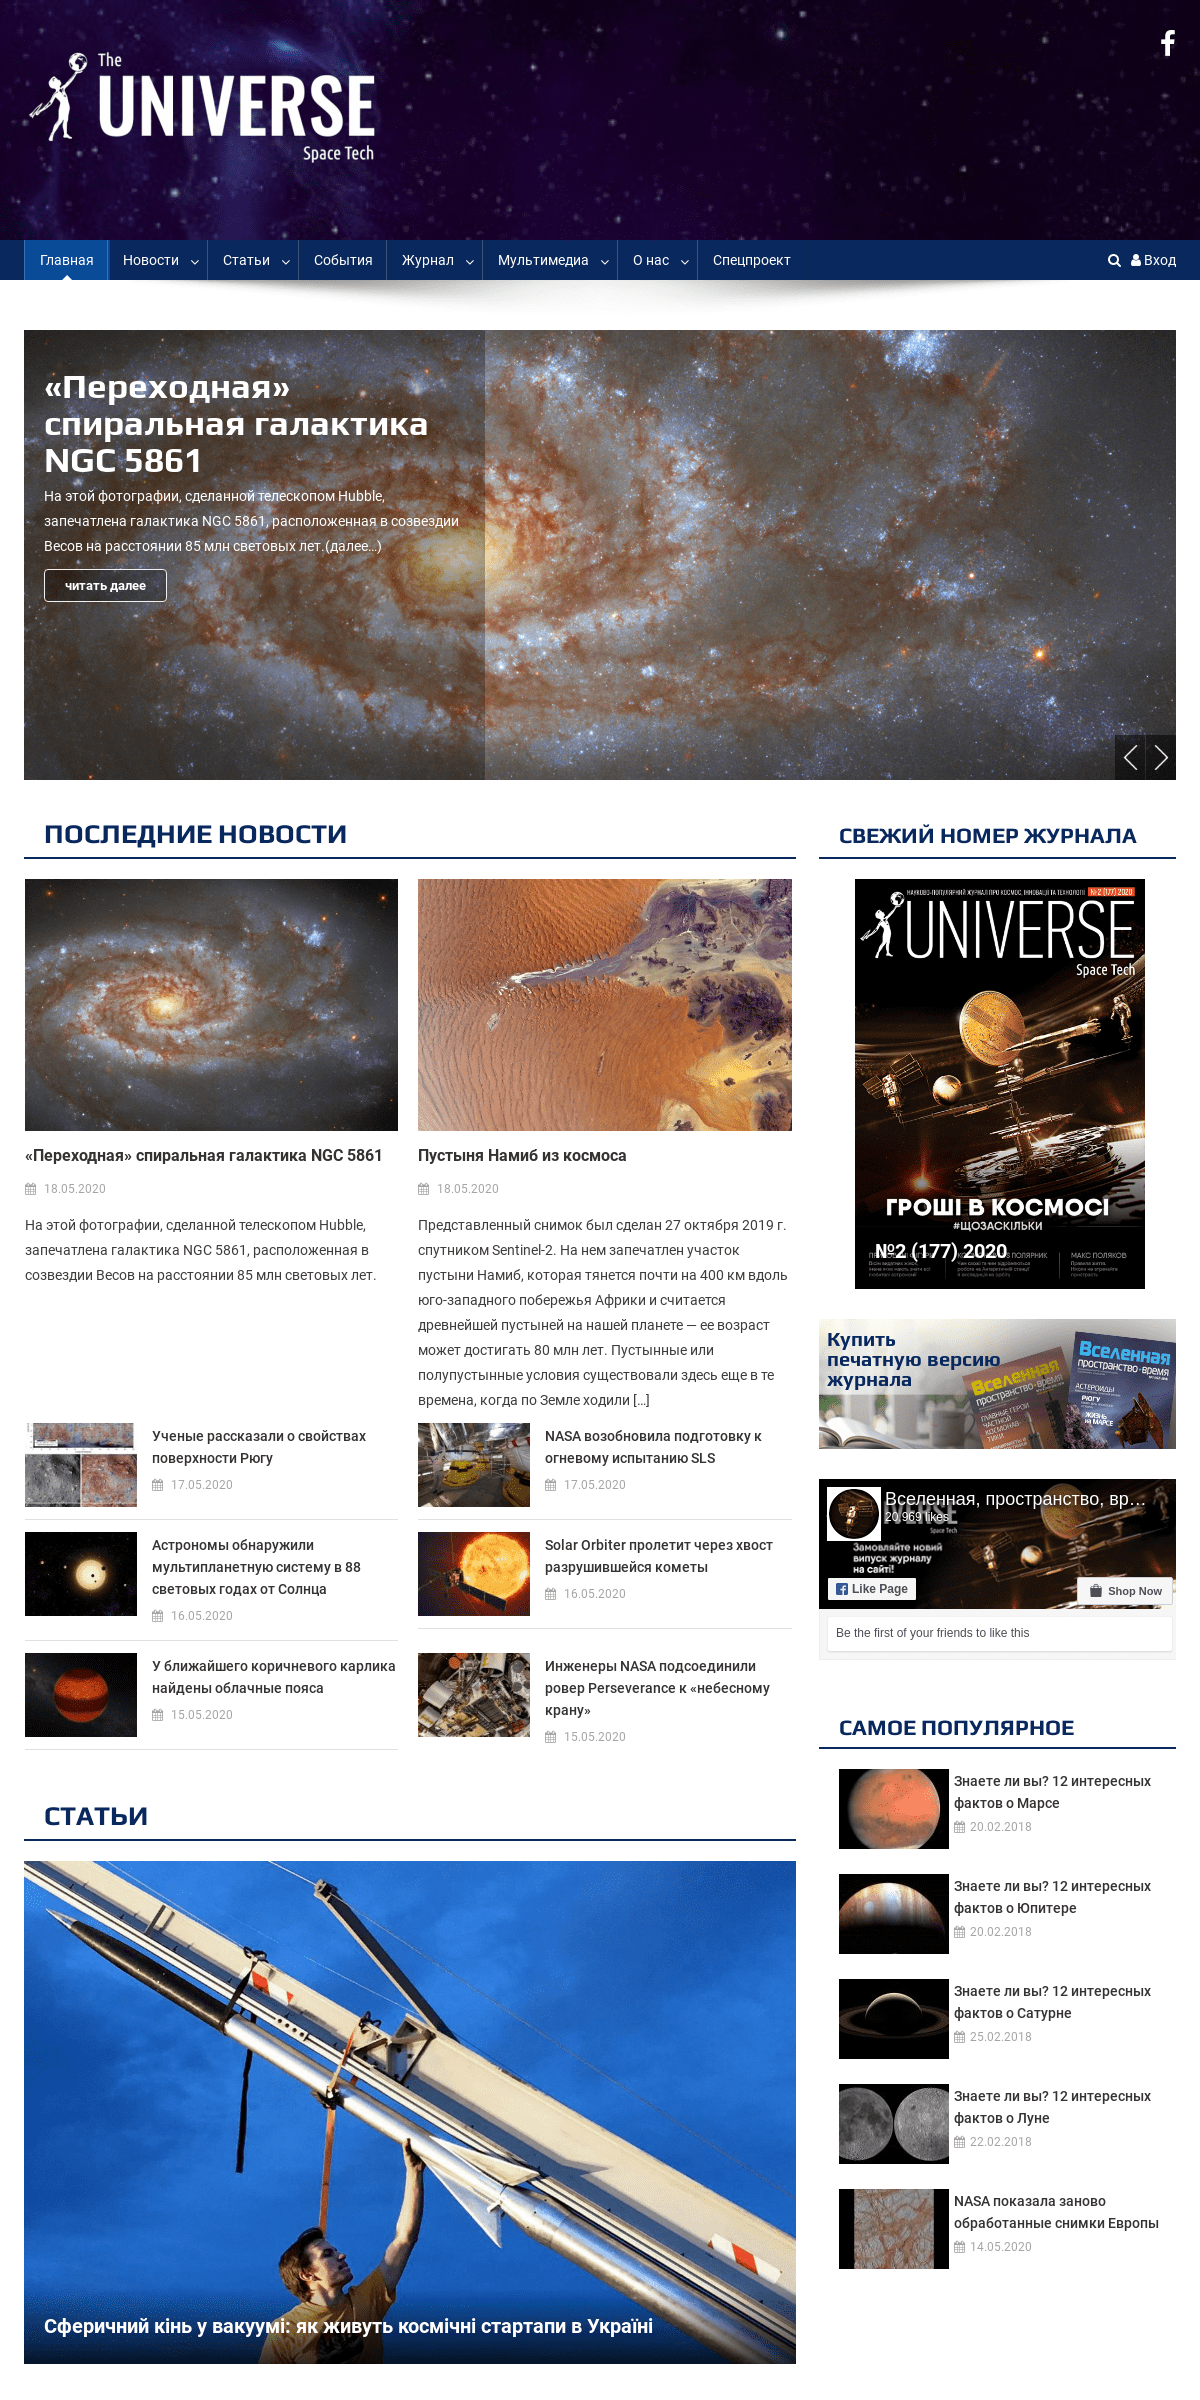 A complete backup of universemagazine.com